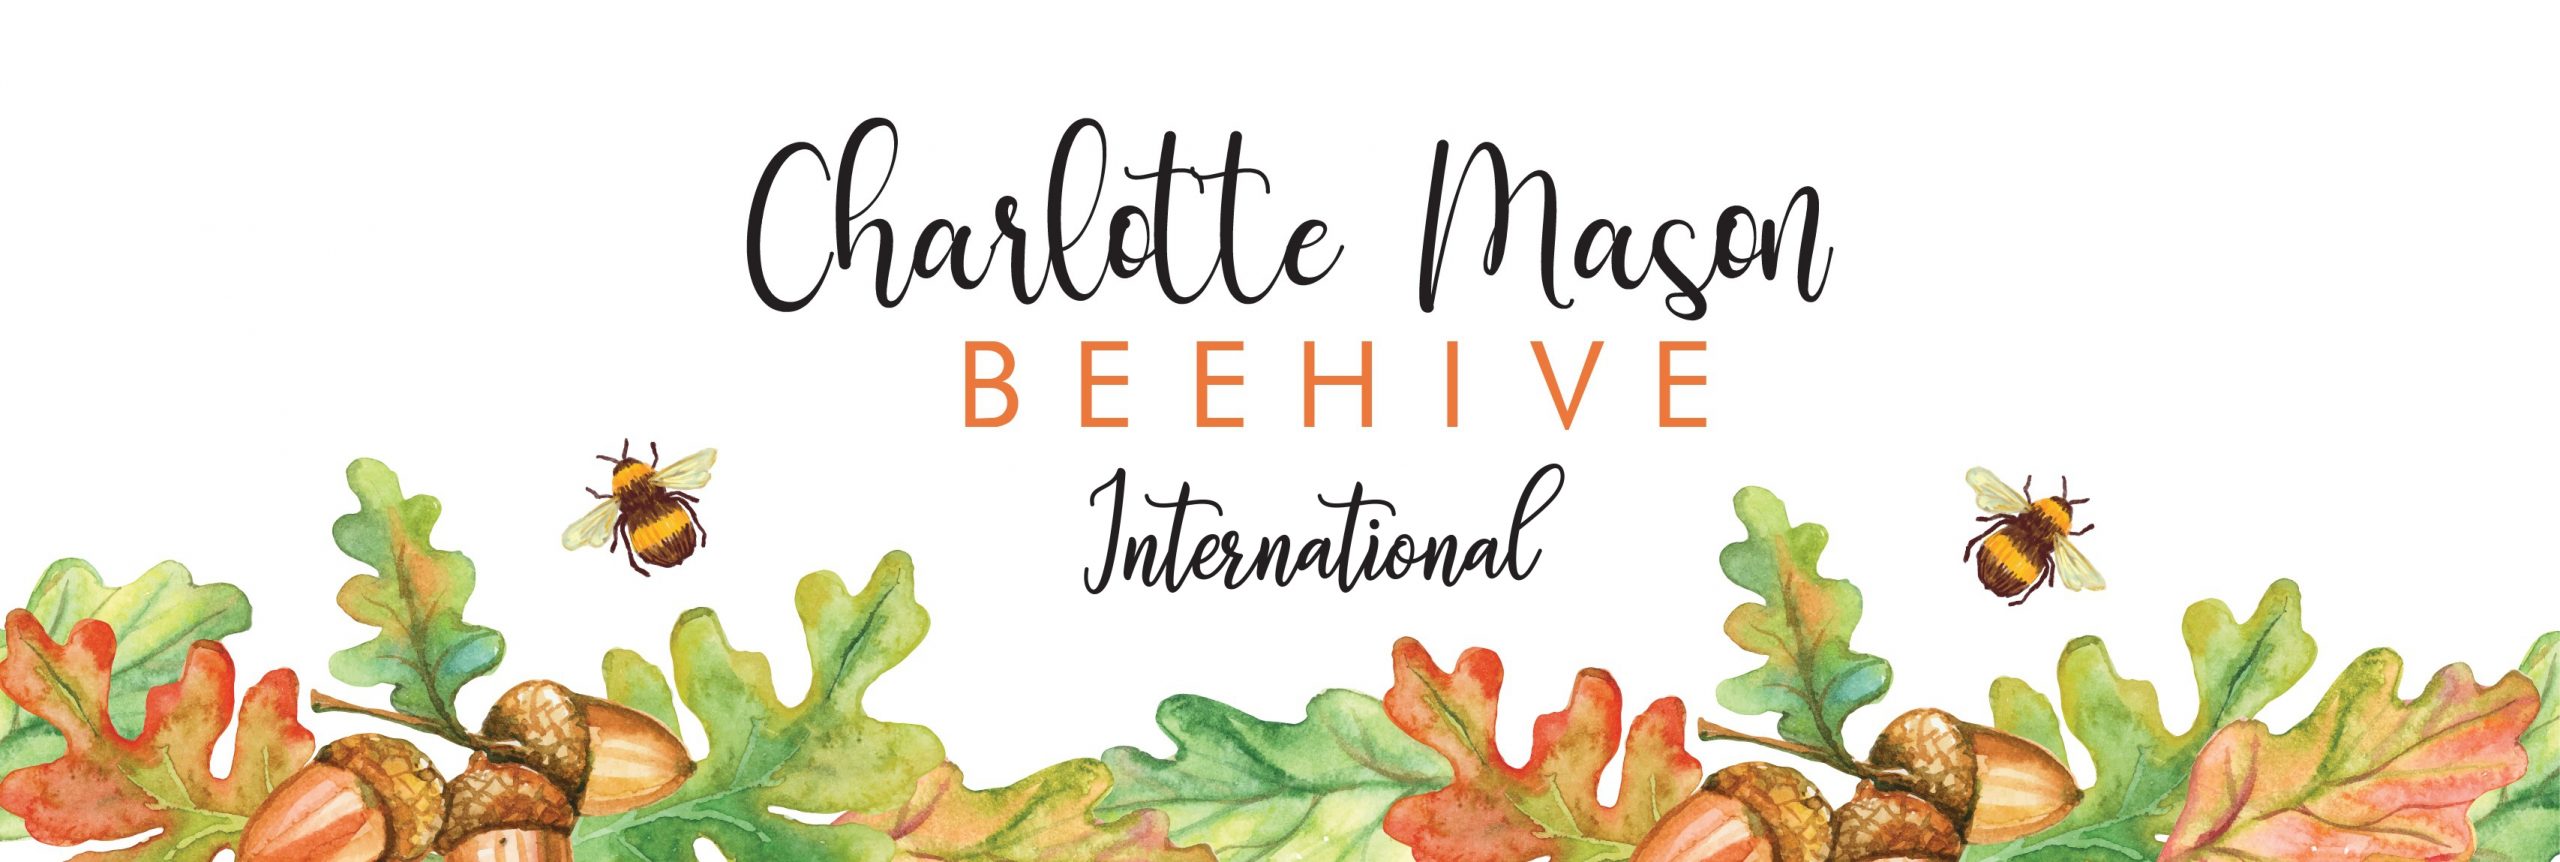 Charlotte Mason Beehive International